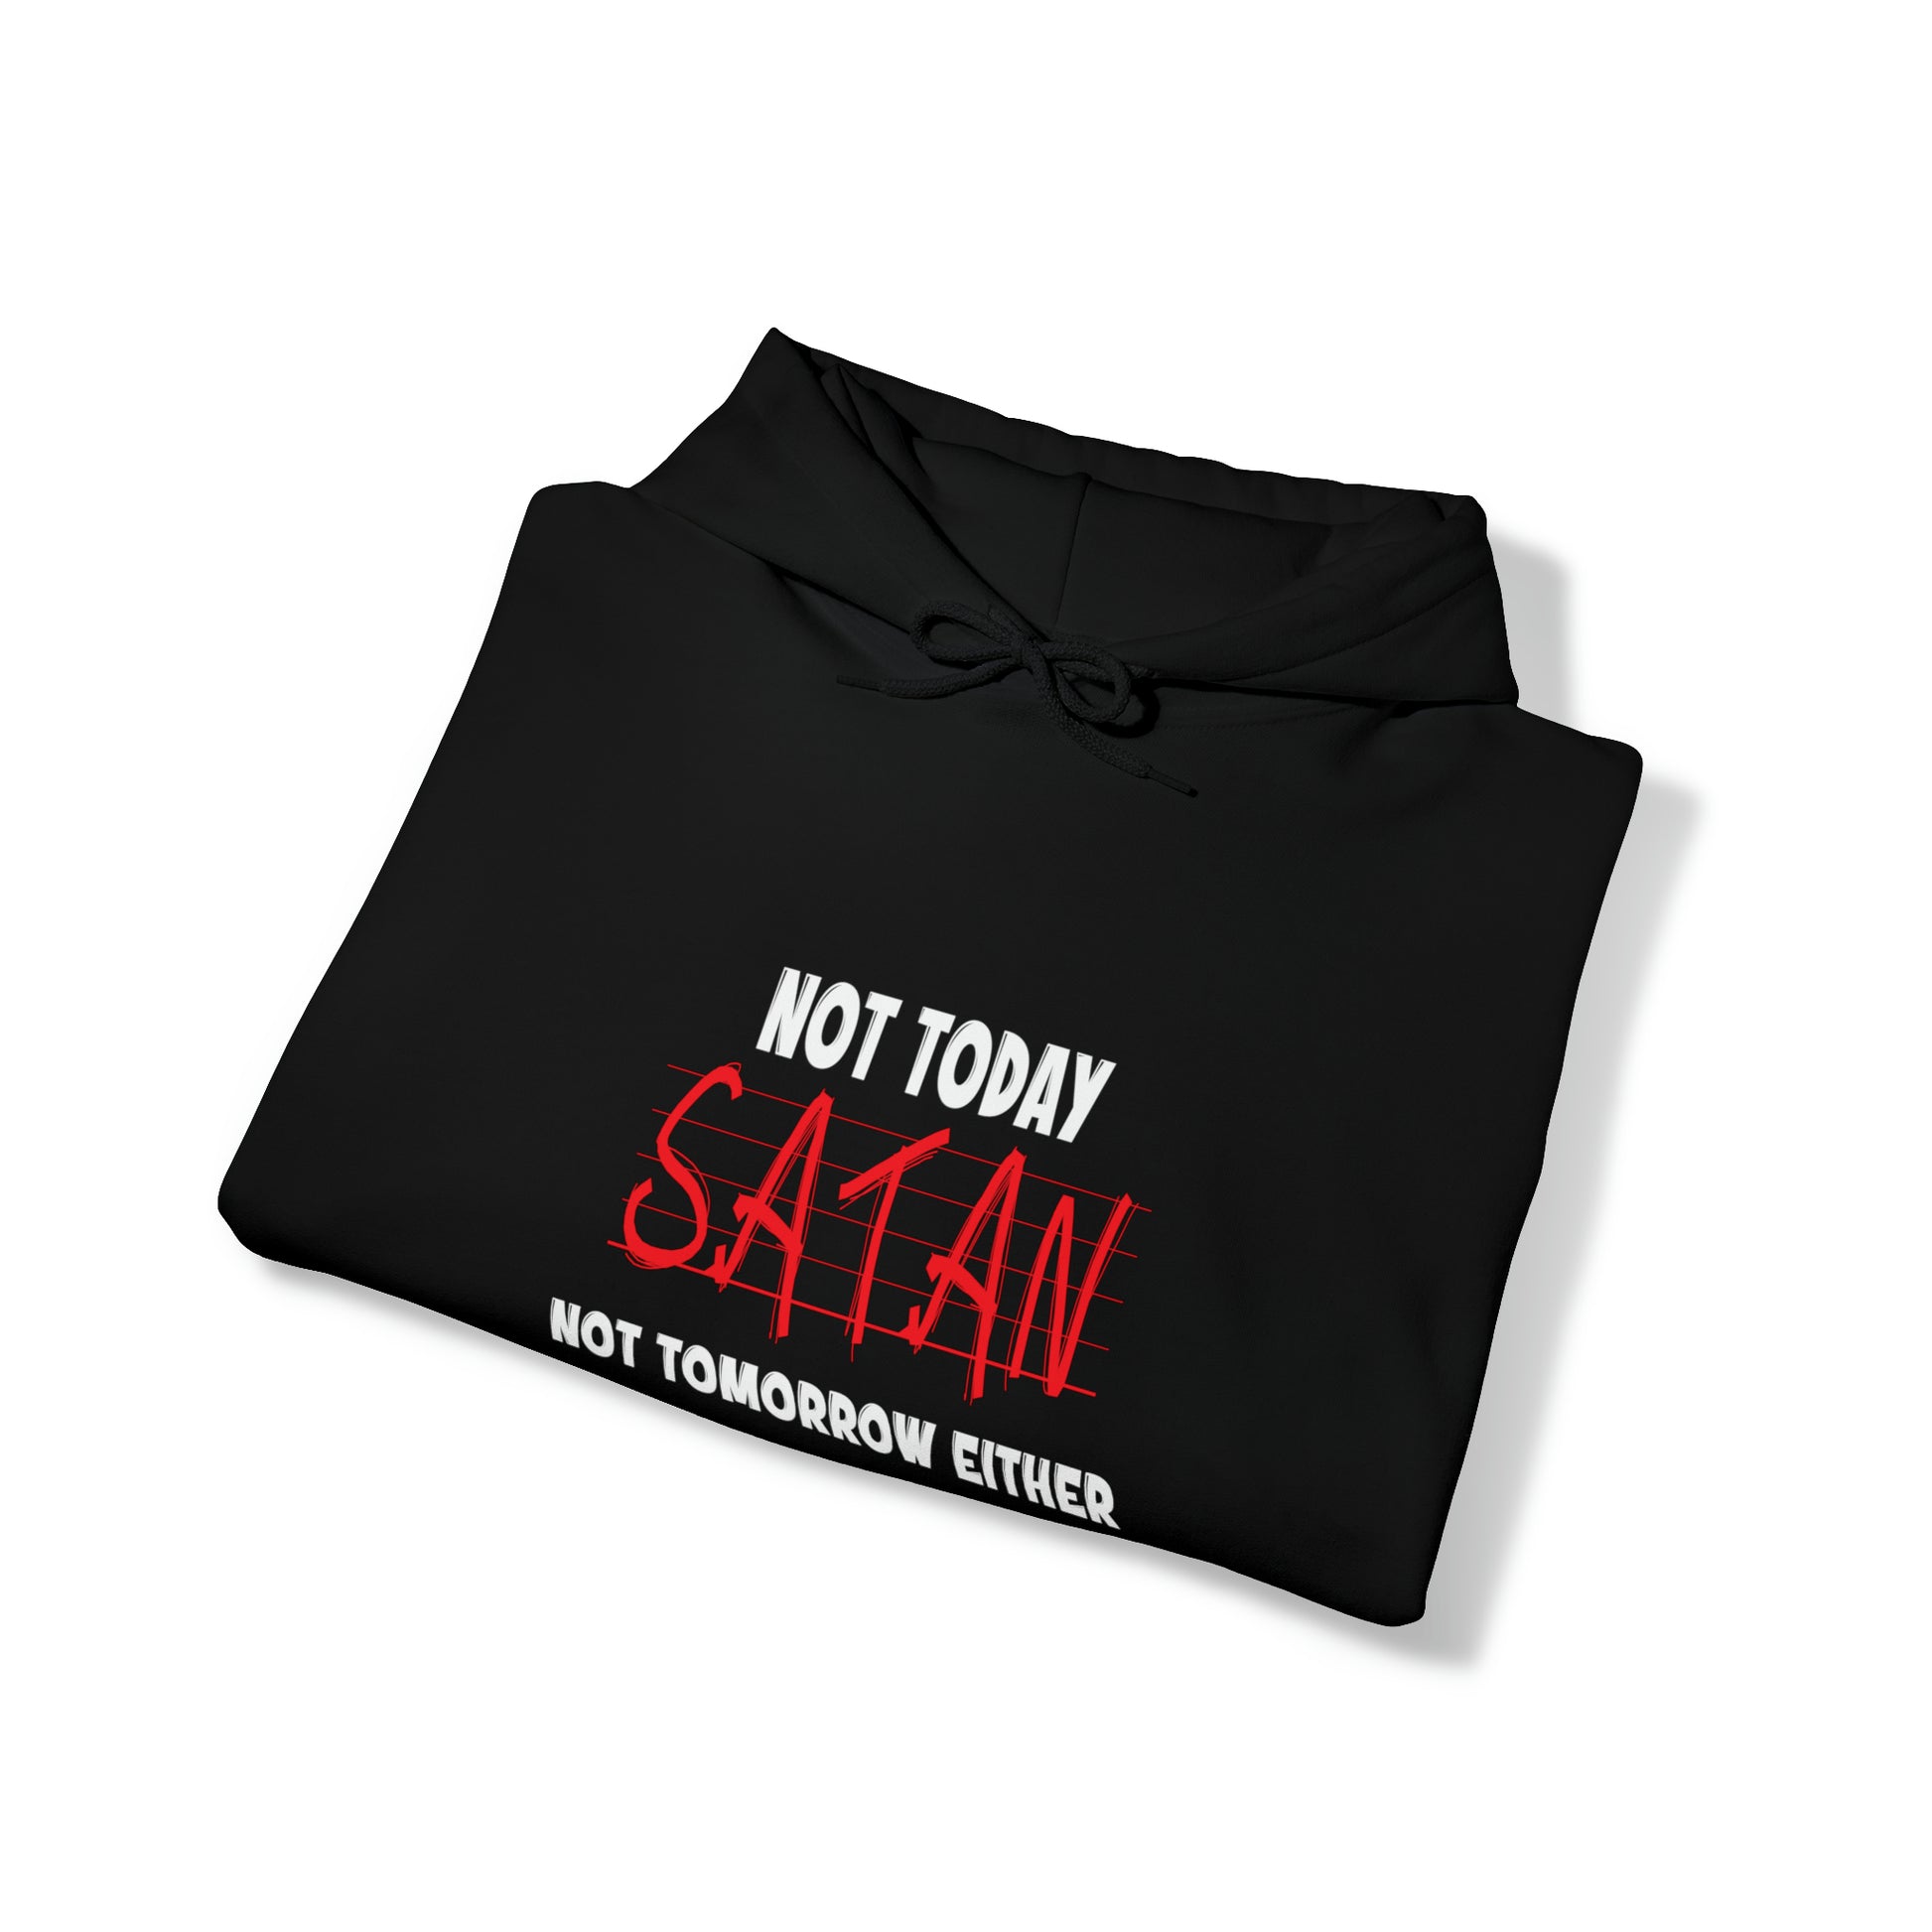 Not Today Satan Not Tomorrow Either Christian Unisex Pull On Hooded sweatshirt Printify